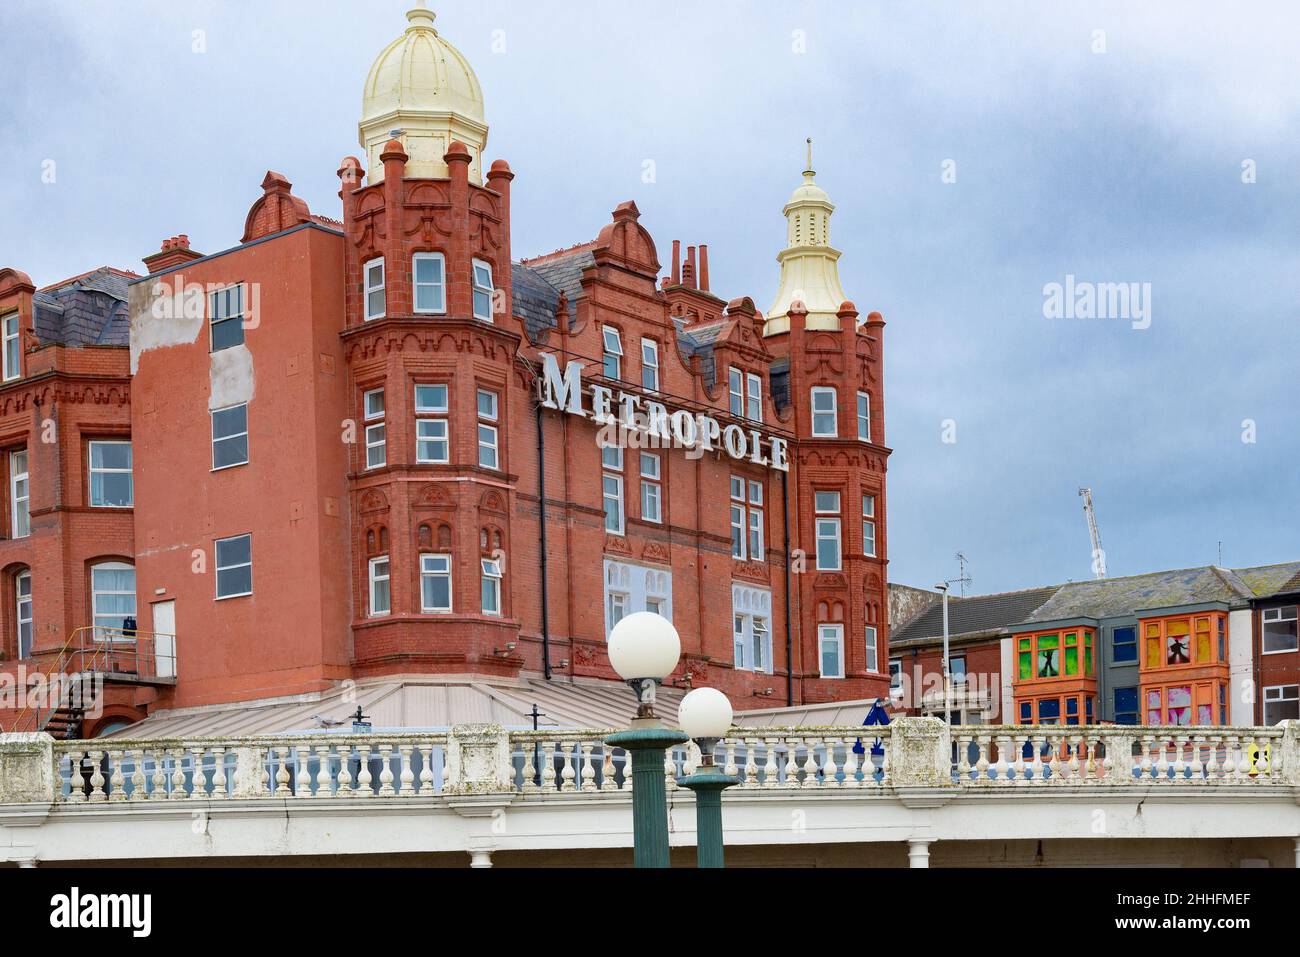 Metropole Hotel, North Shore, Blackpool, Lancashire, Reino Unido Foto de stock